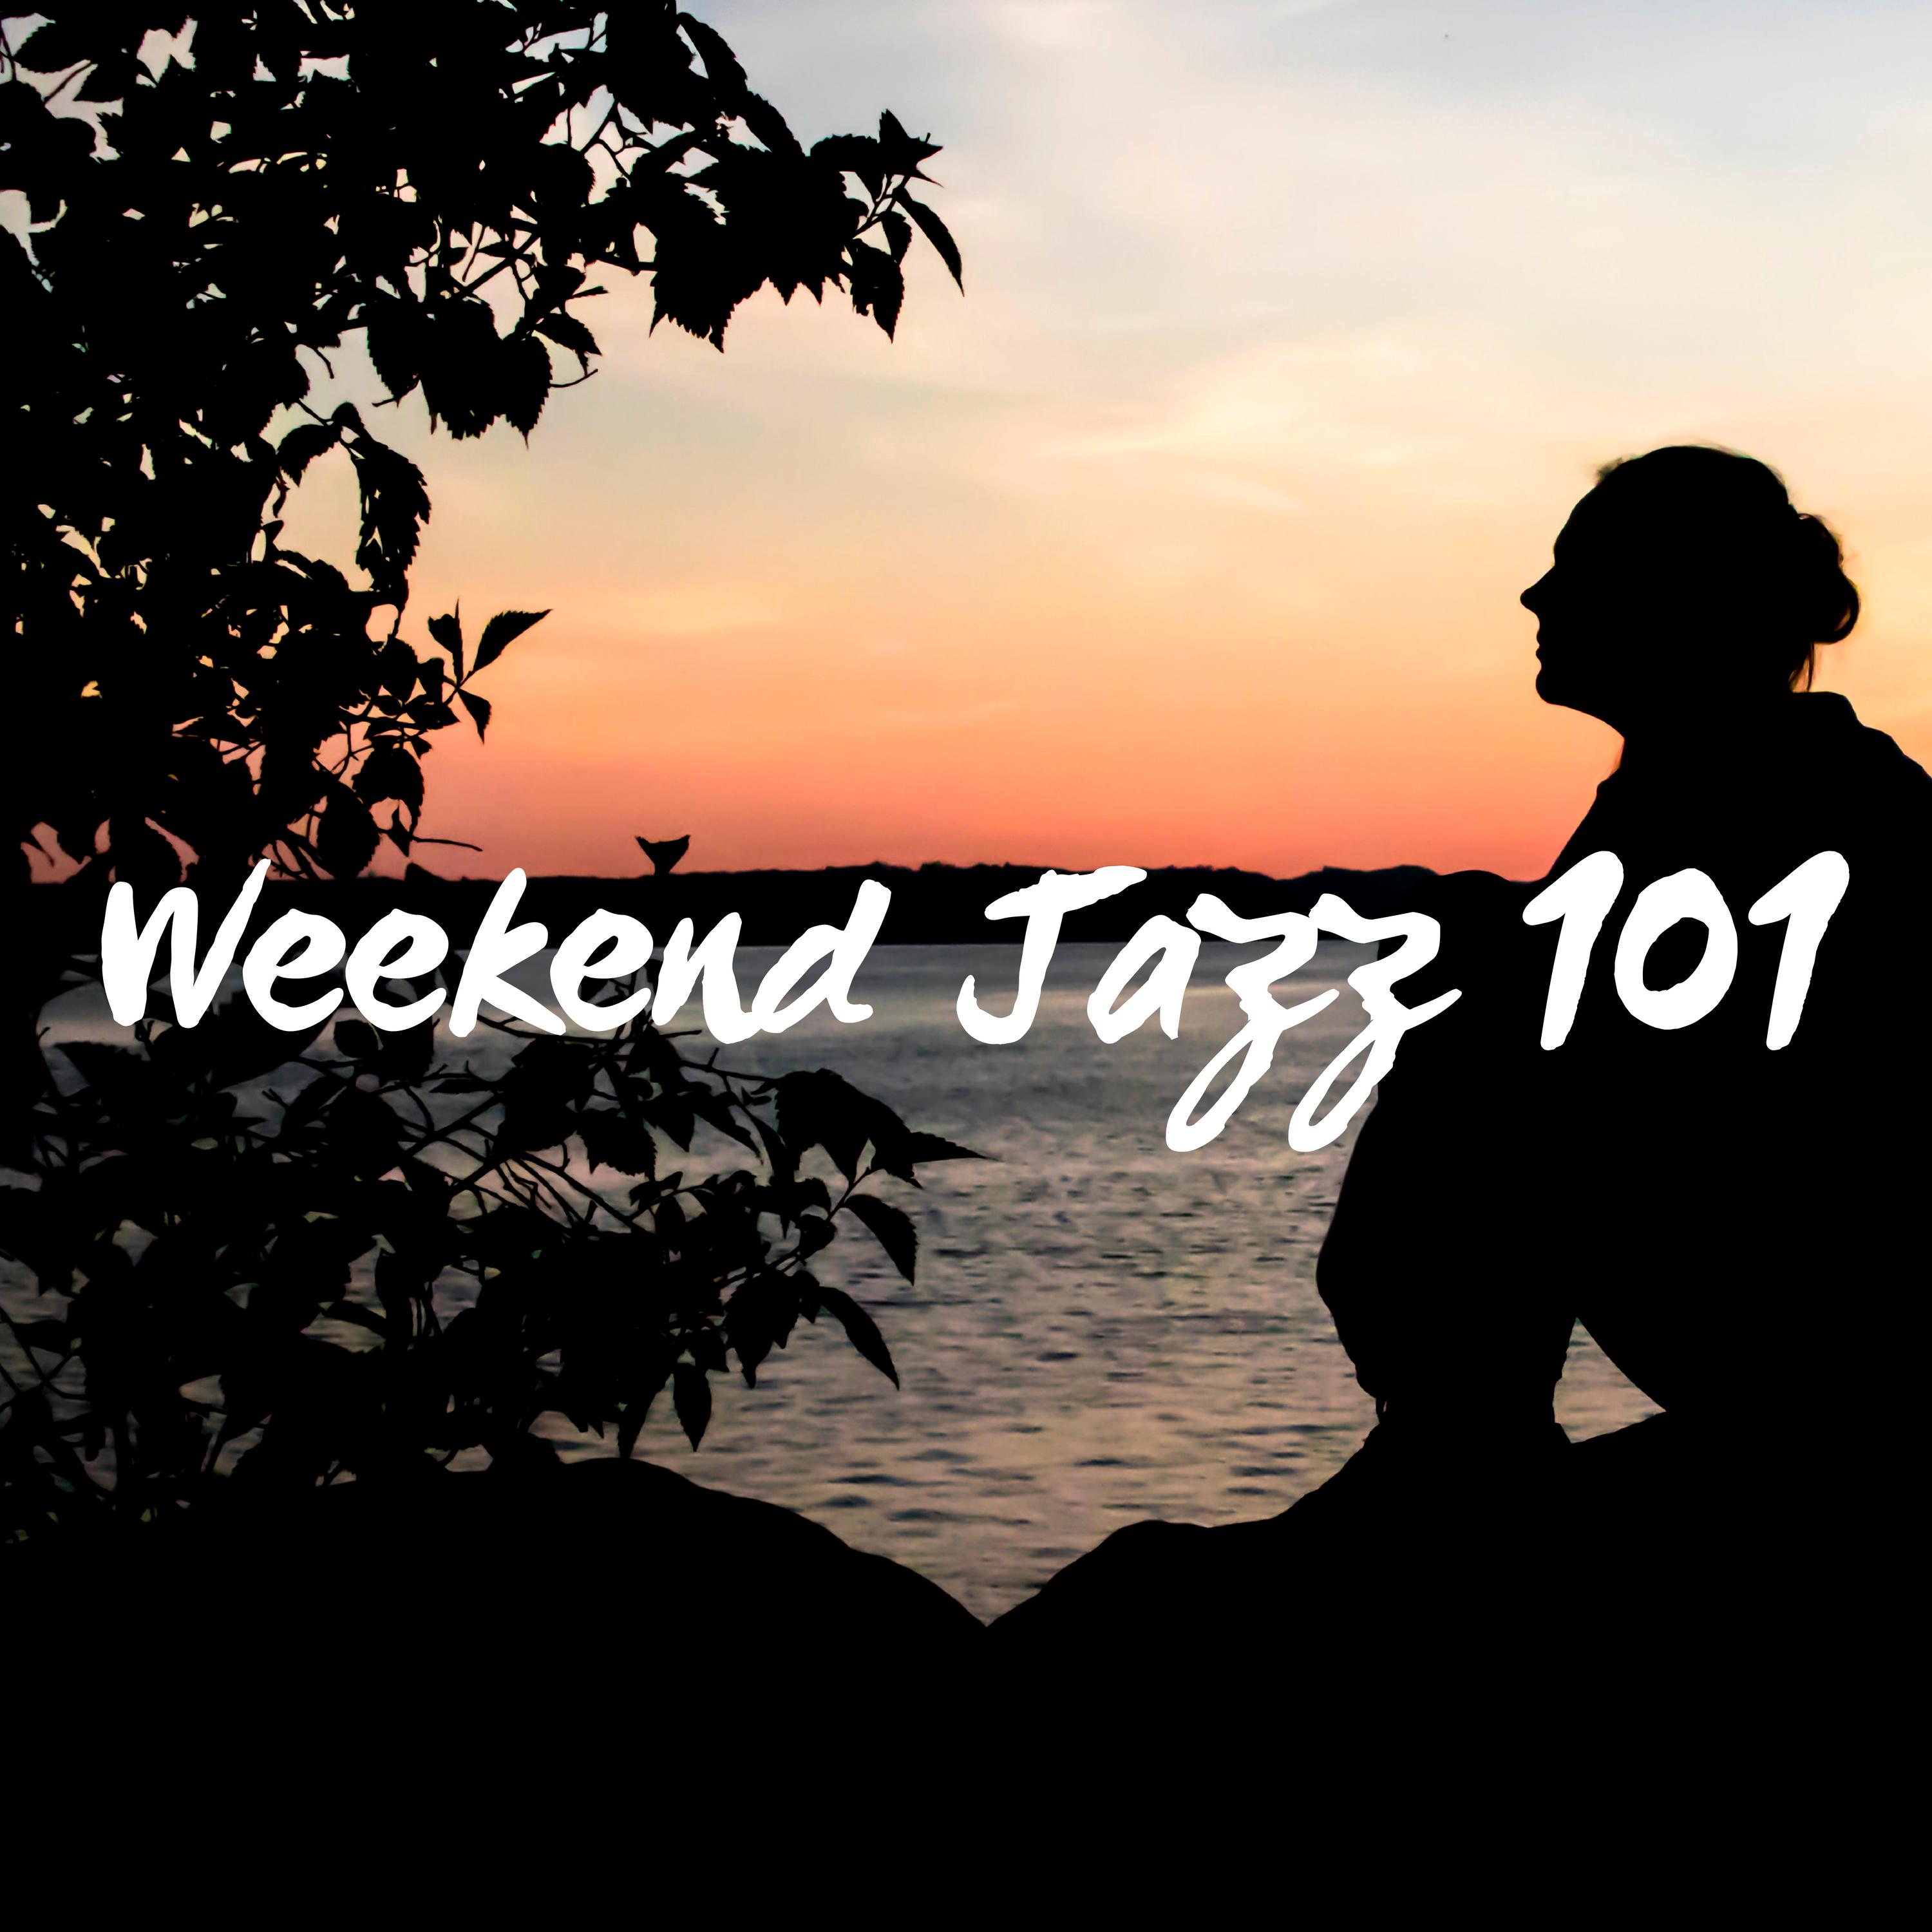 Weekend Jazz 101 - Infinite Jazz Music for Deep Relaxation